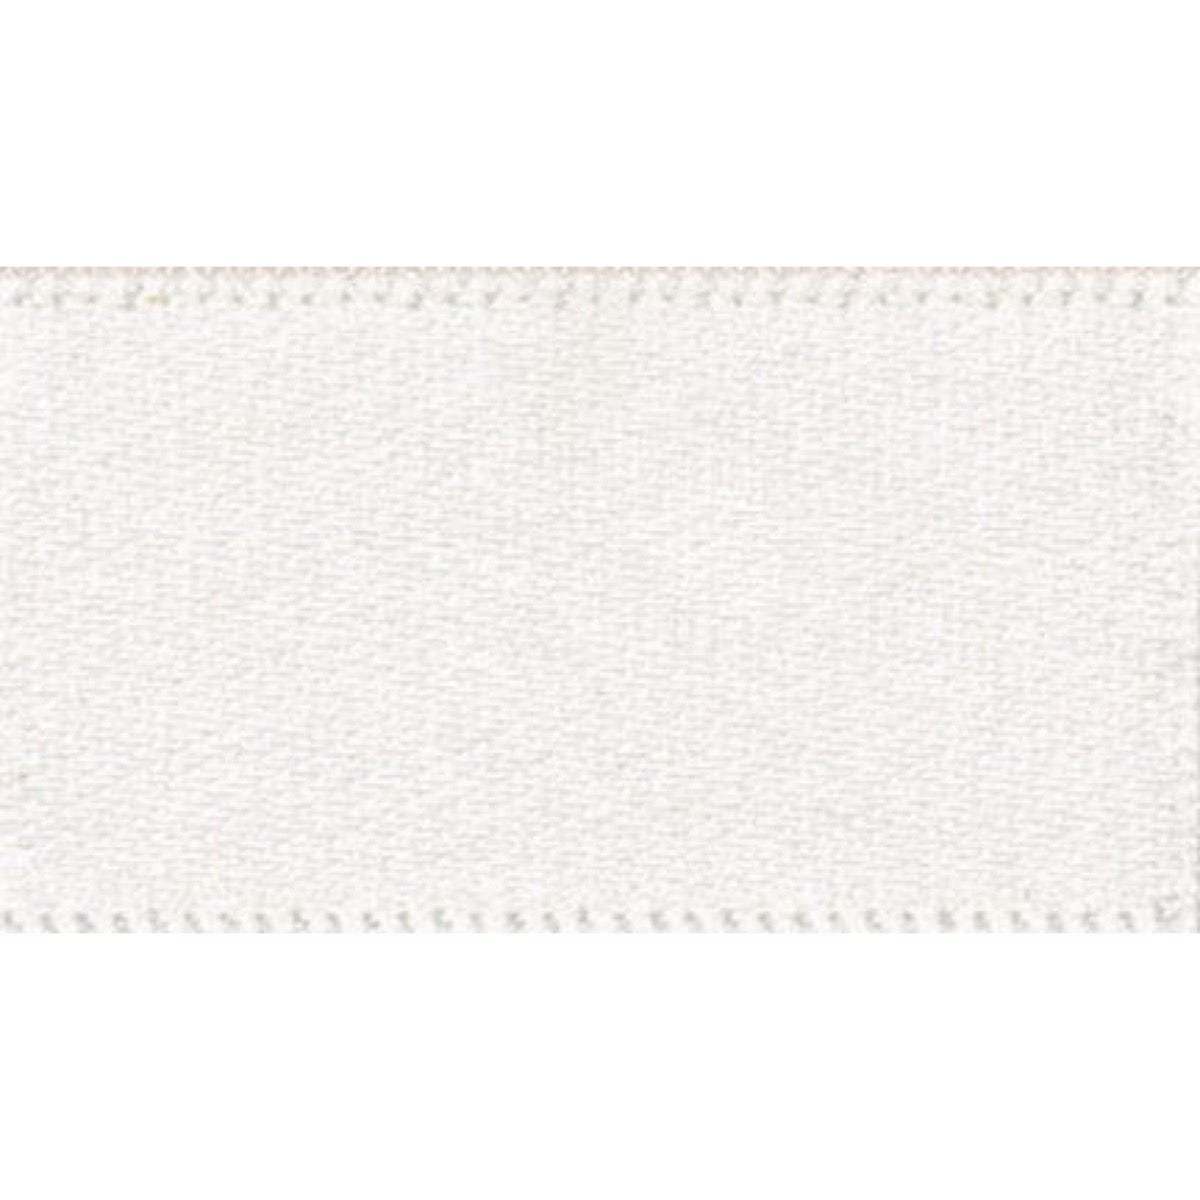 Double Faced Satin Ribbon: Bridal White: 15mm wide. Price per metre.